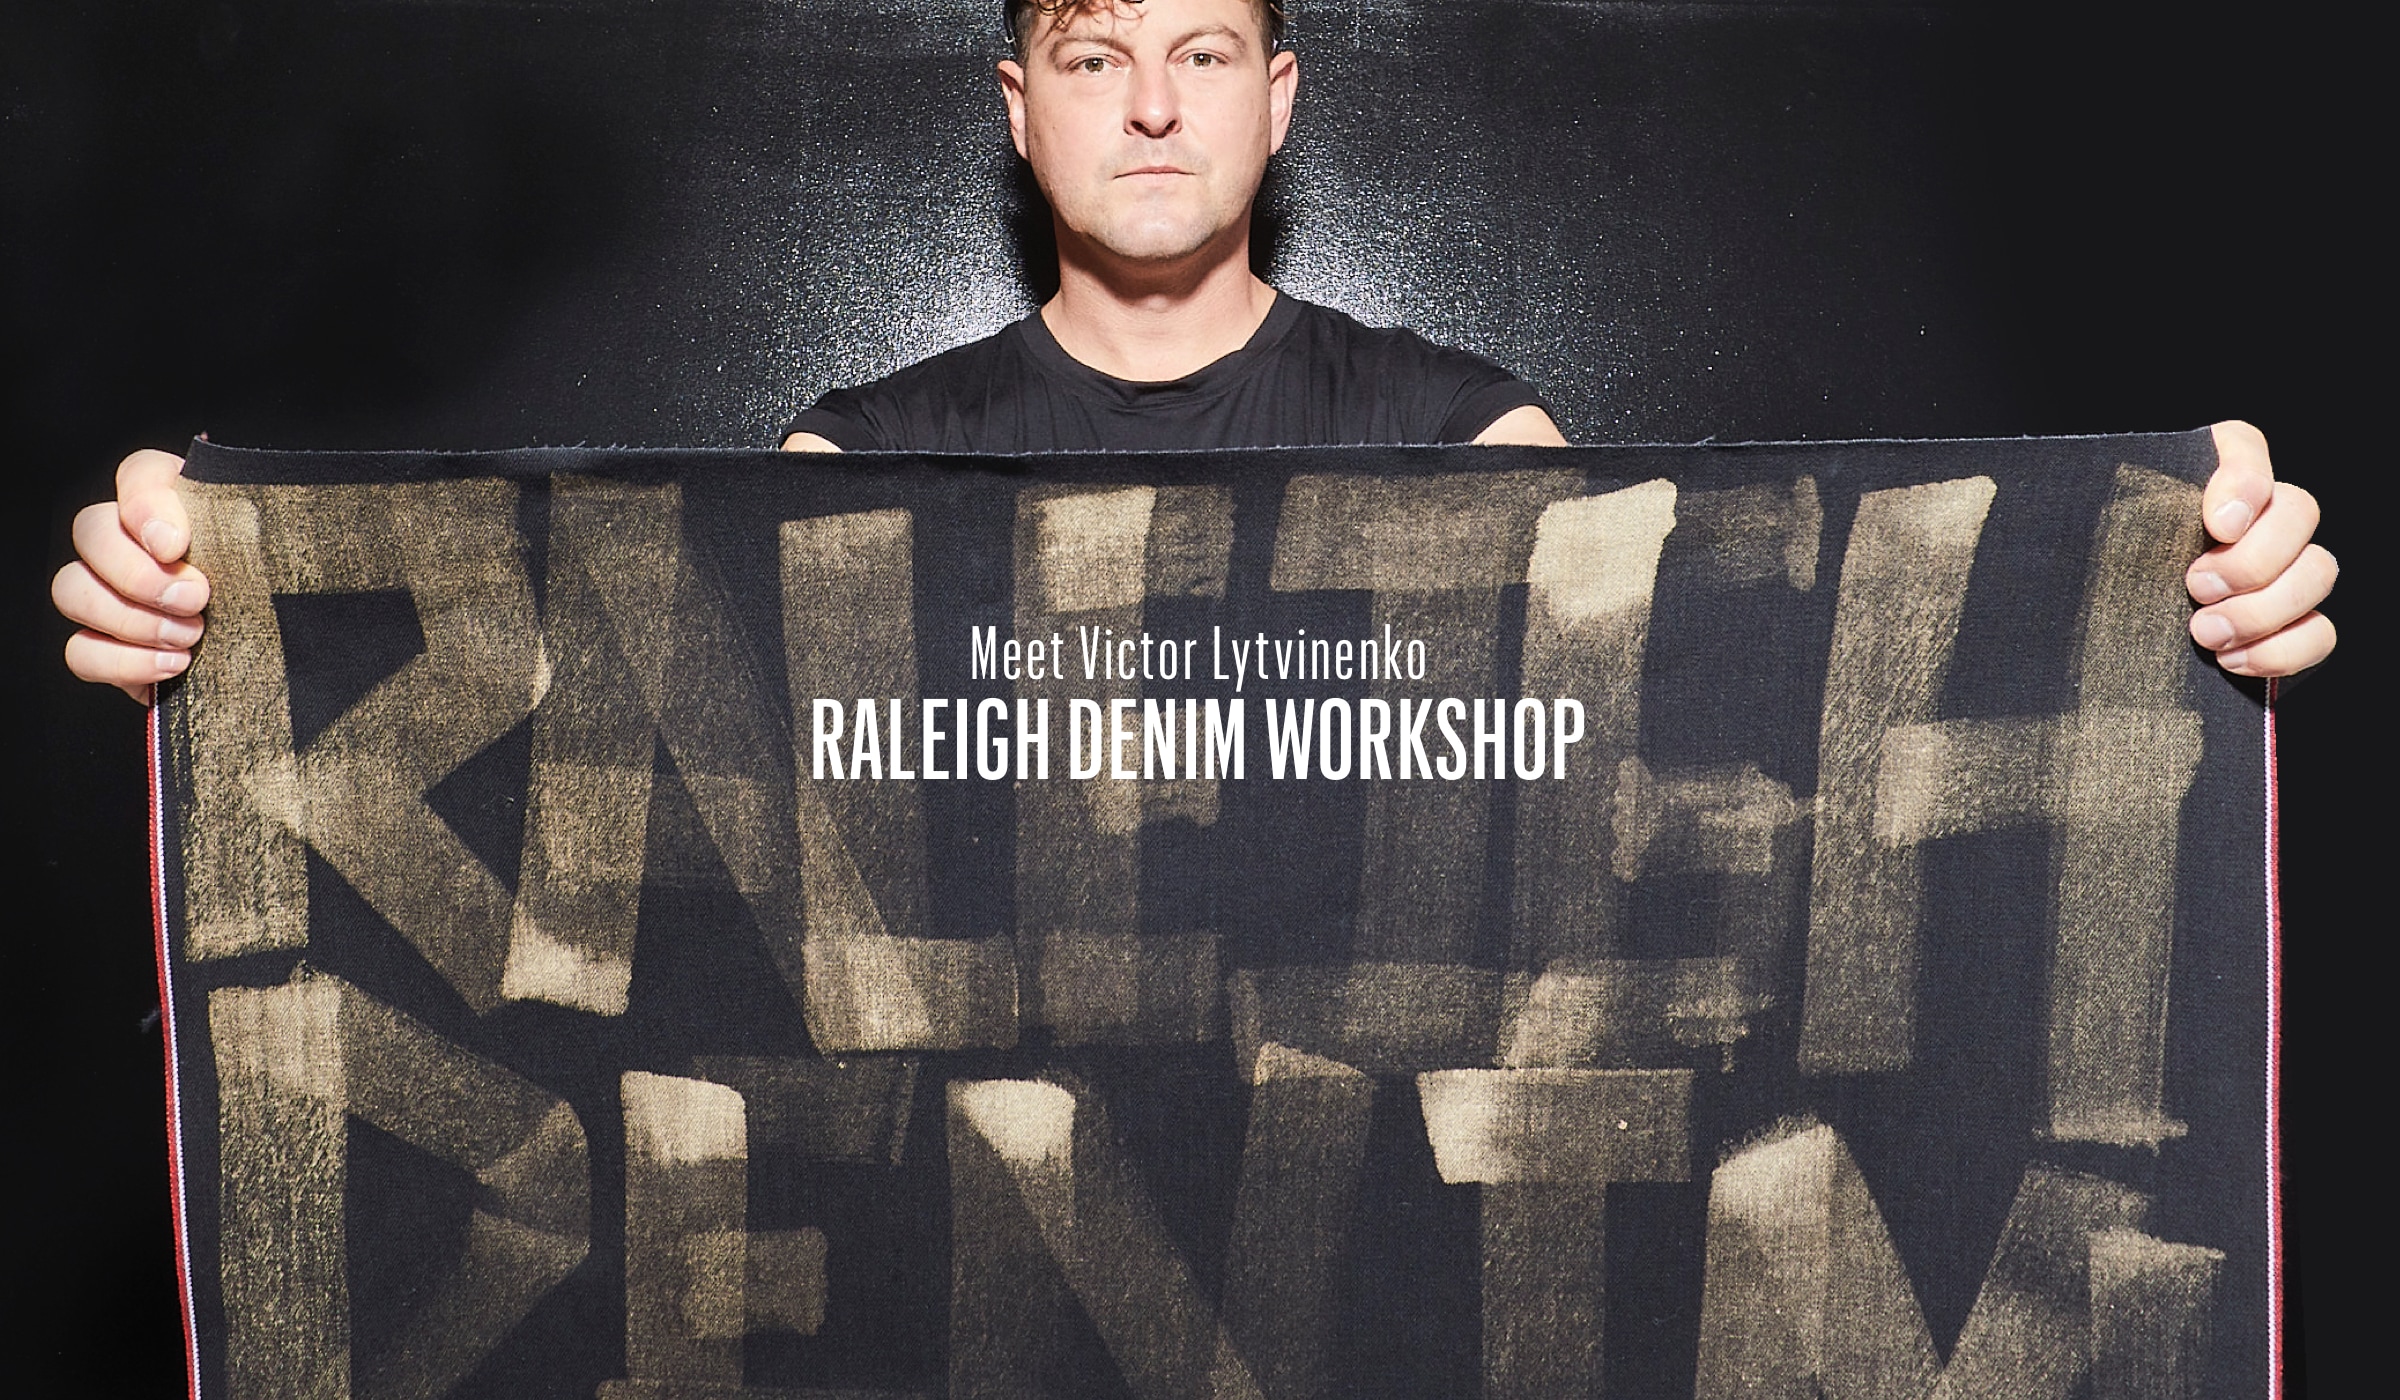 Meet Victor Lytvinenko of Raleigh Denim Workshop